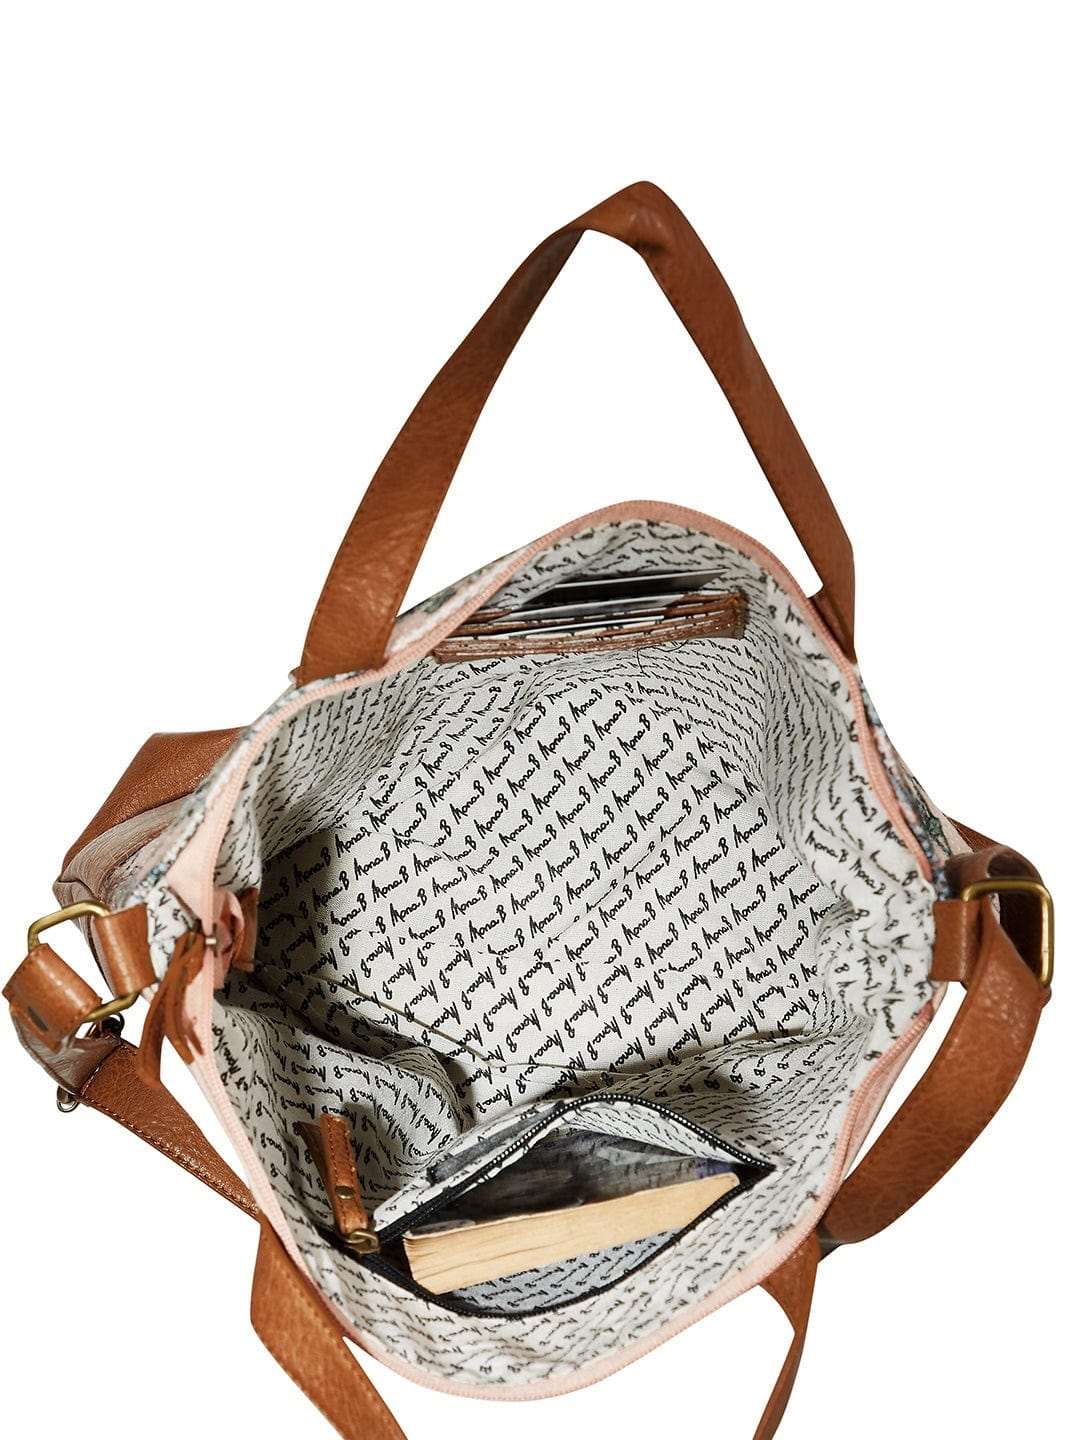 Mona-B Bag Mona B Canvas Large Vintage Handbag, Shoulder Bag, Zipper Tote Bag for Shopping, Travel with Stylish Design For Women (Pink, Kilim) - M-7000